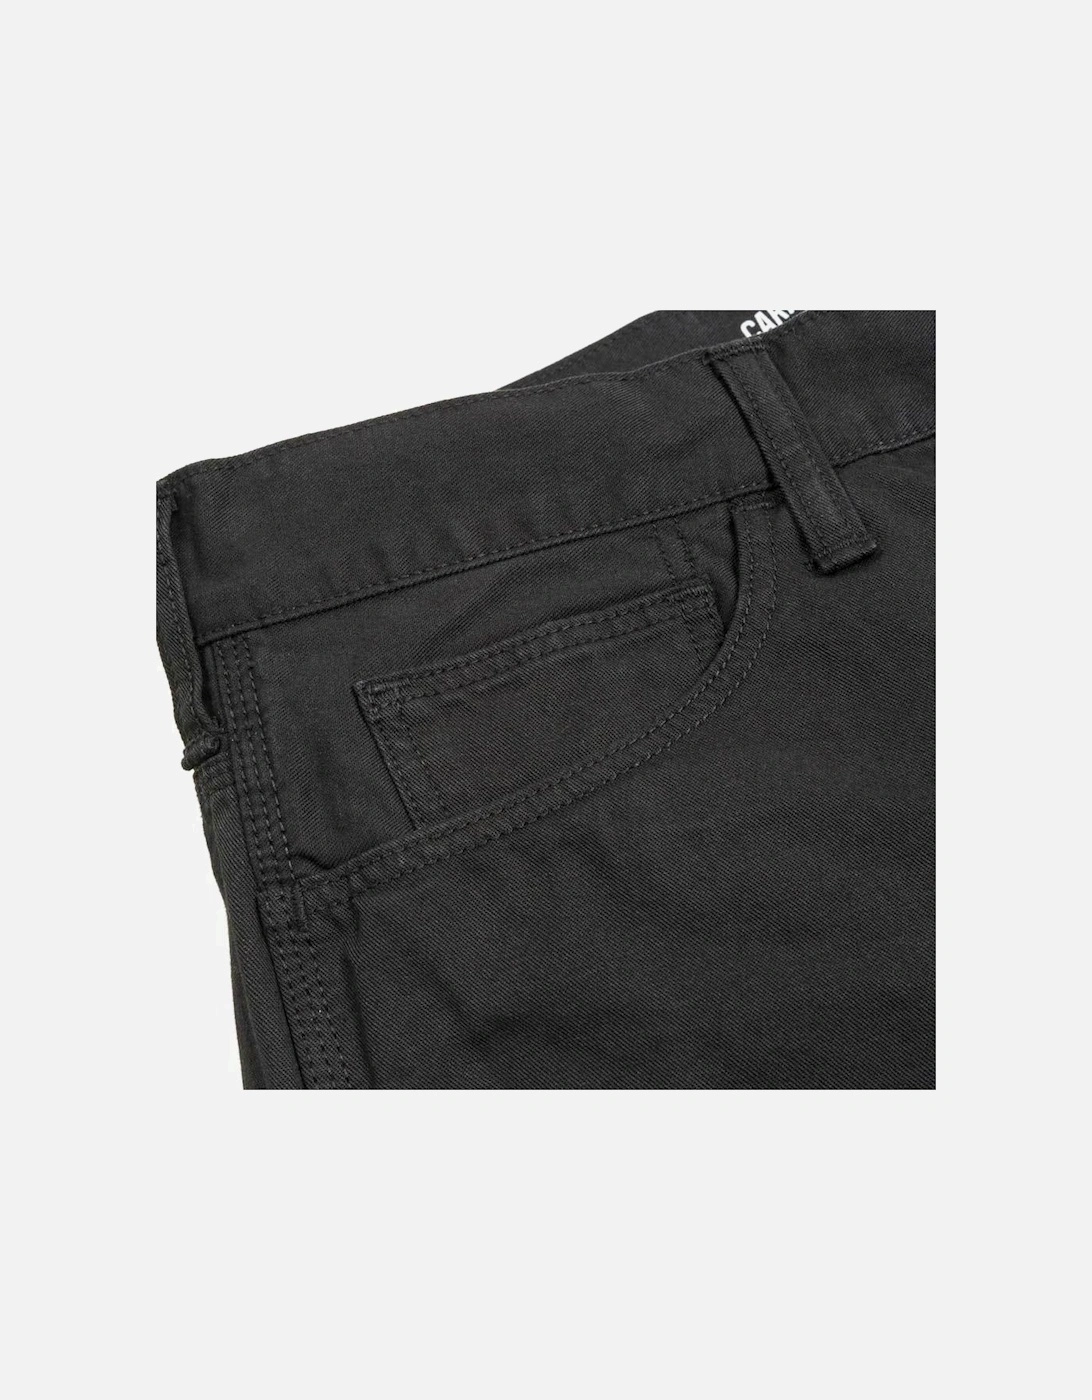 Toledo Shorts - Black